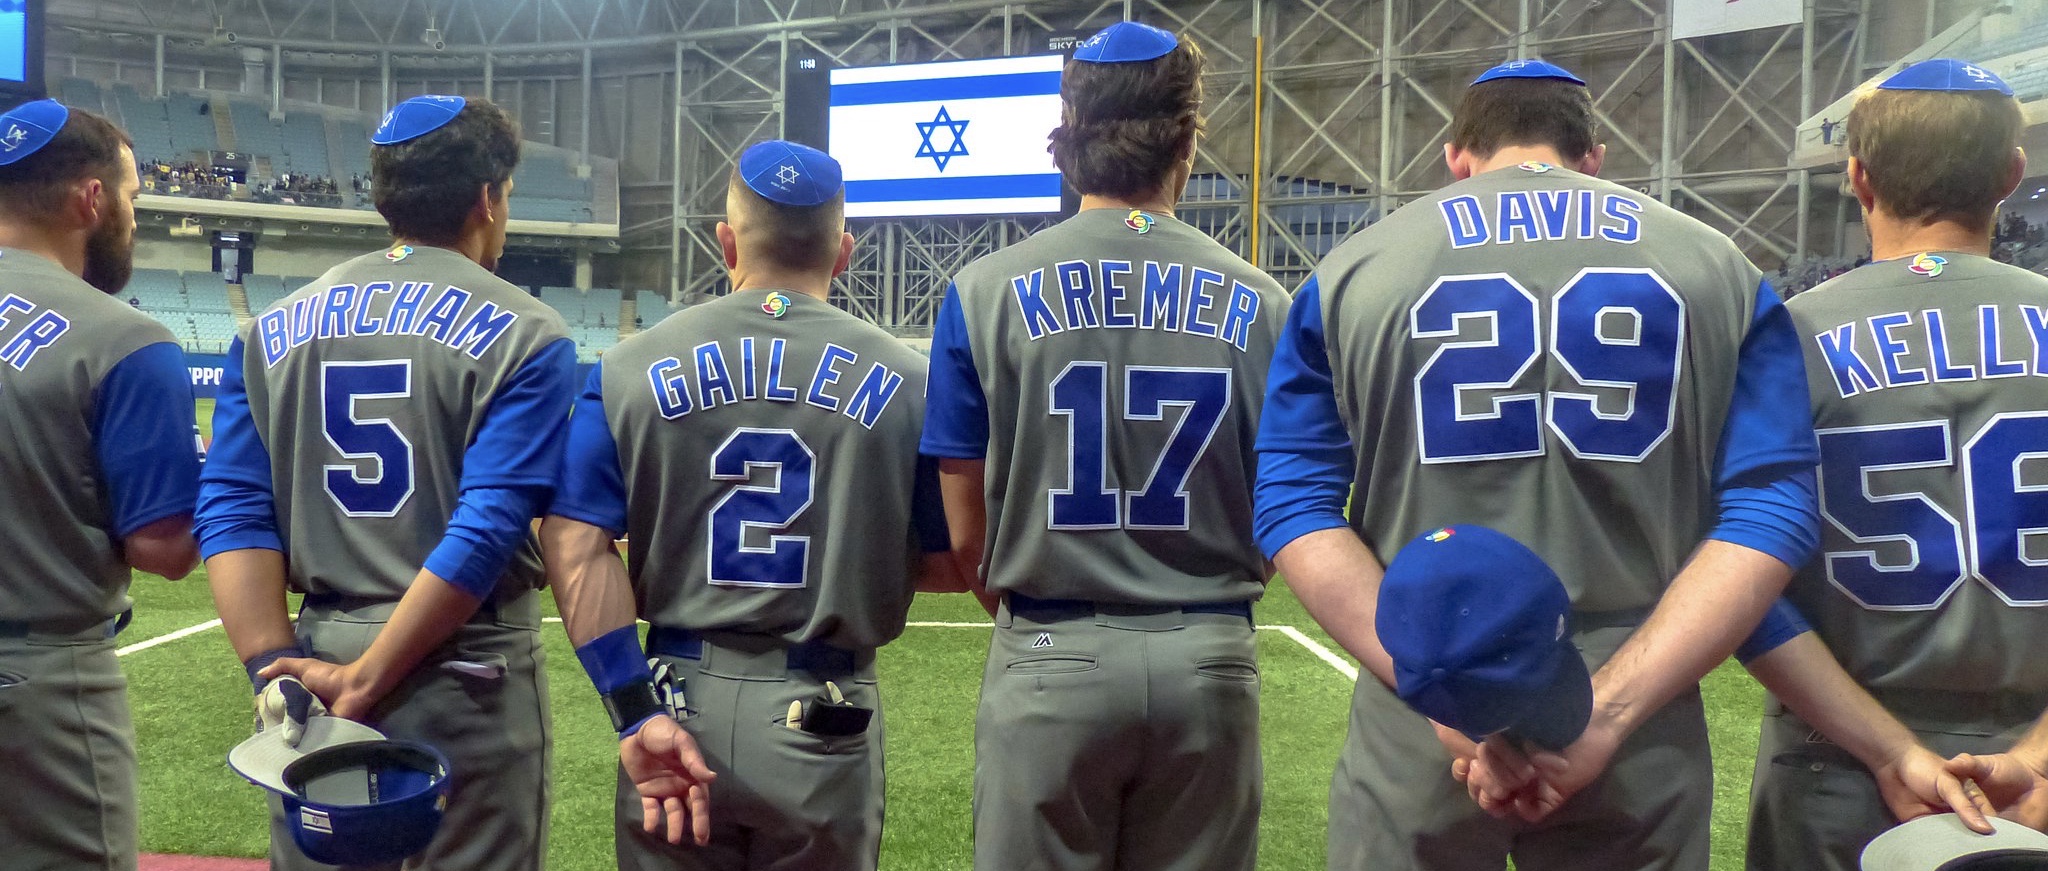 Blue & White Baseball & Softball, Treadwell returns to the Holy Land! Israel Sports Rabbi Rundown July 1, 2019